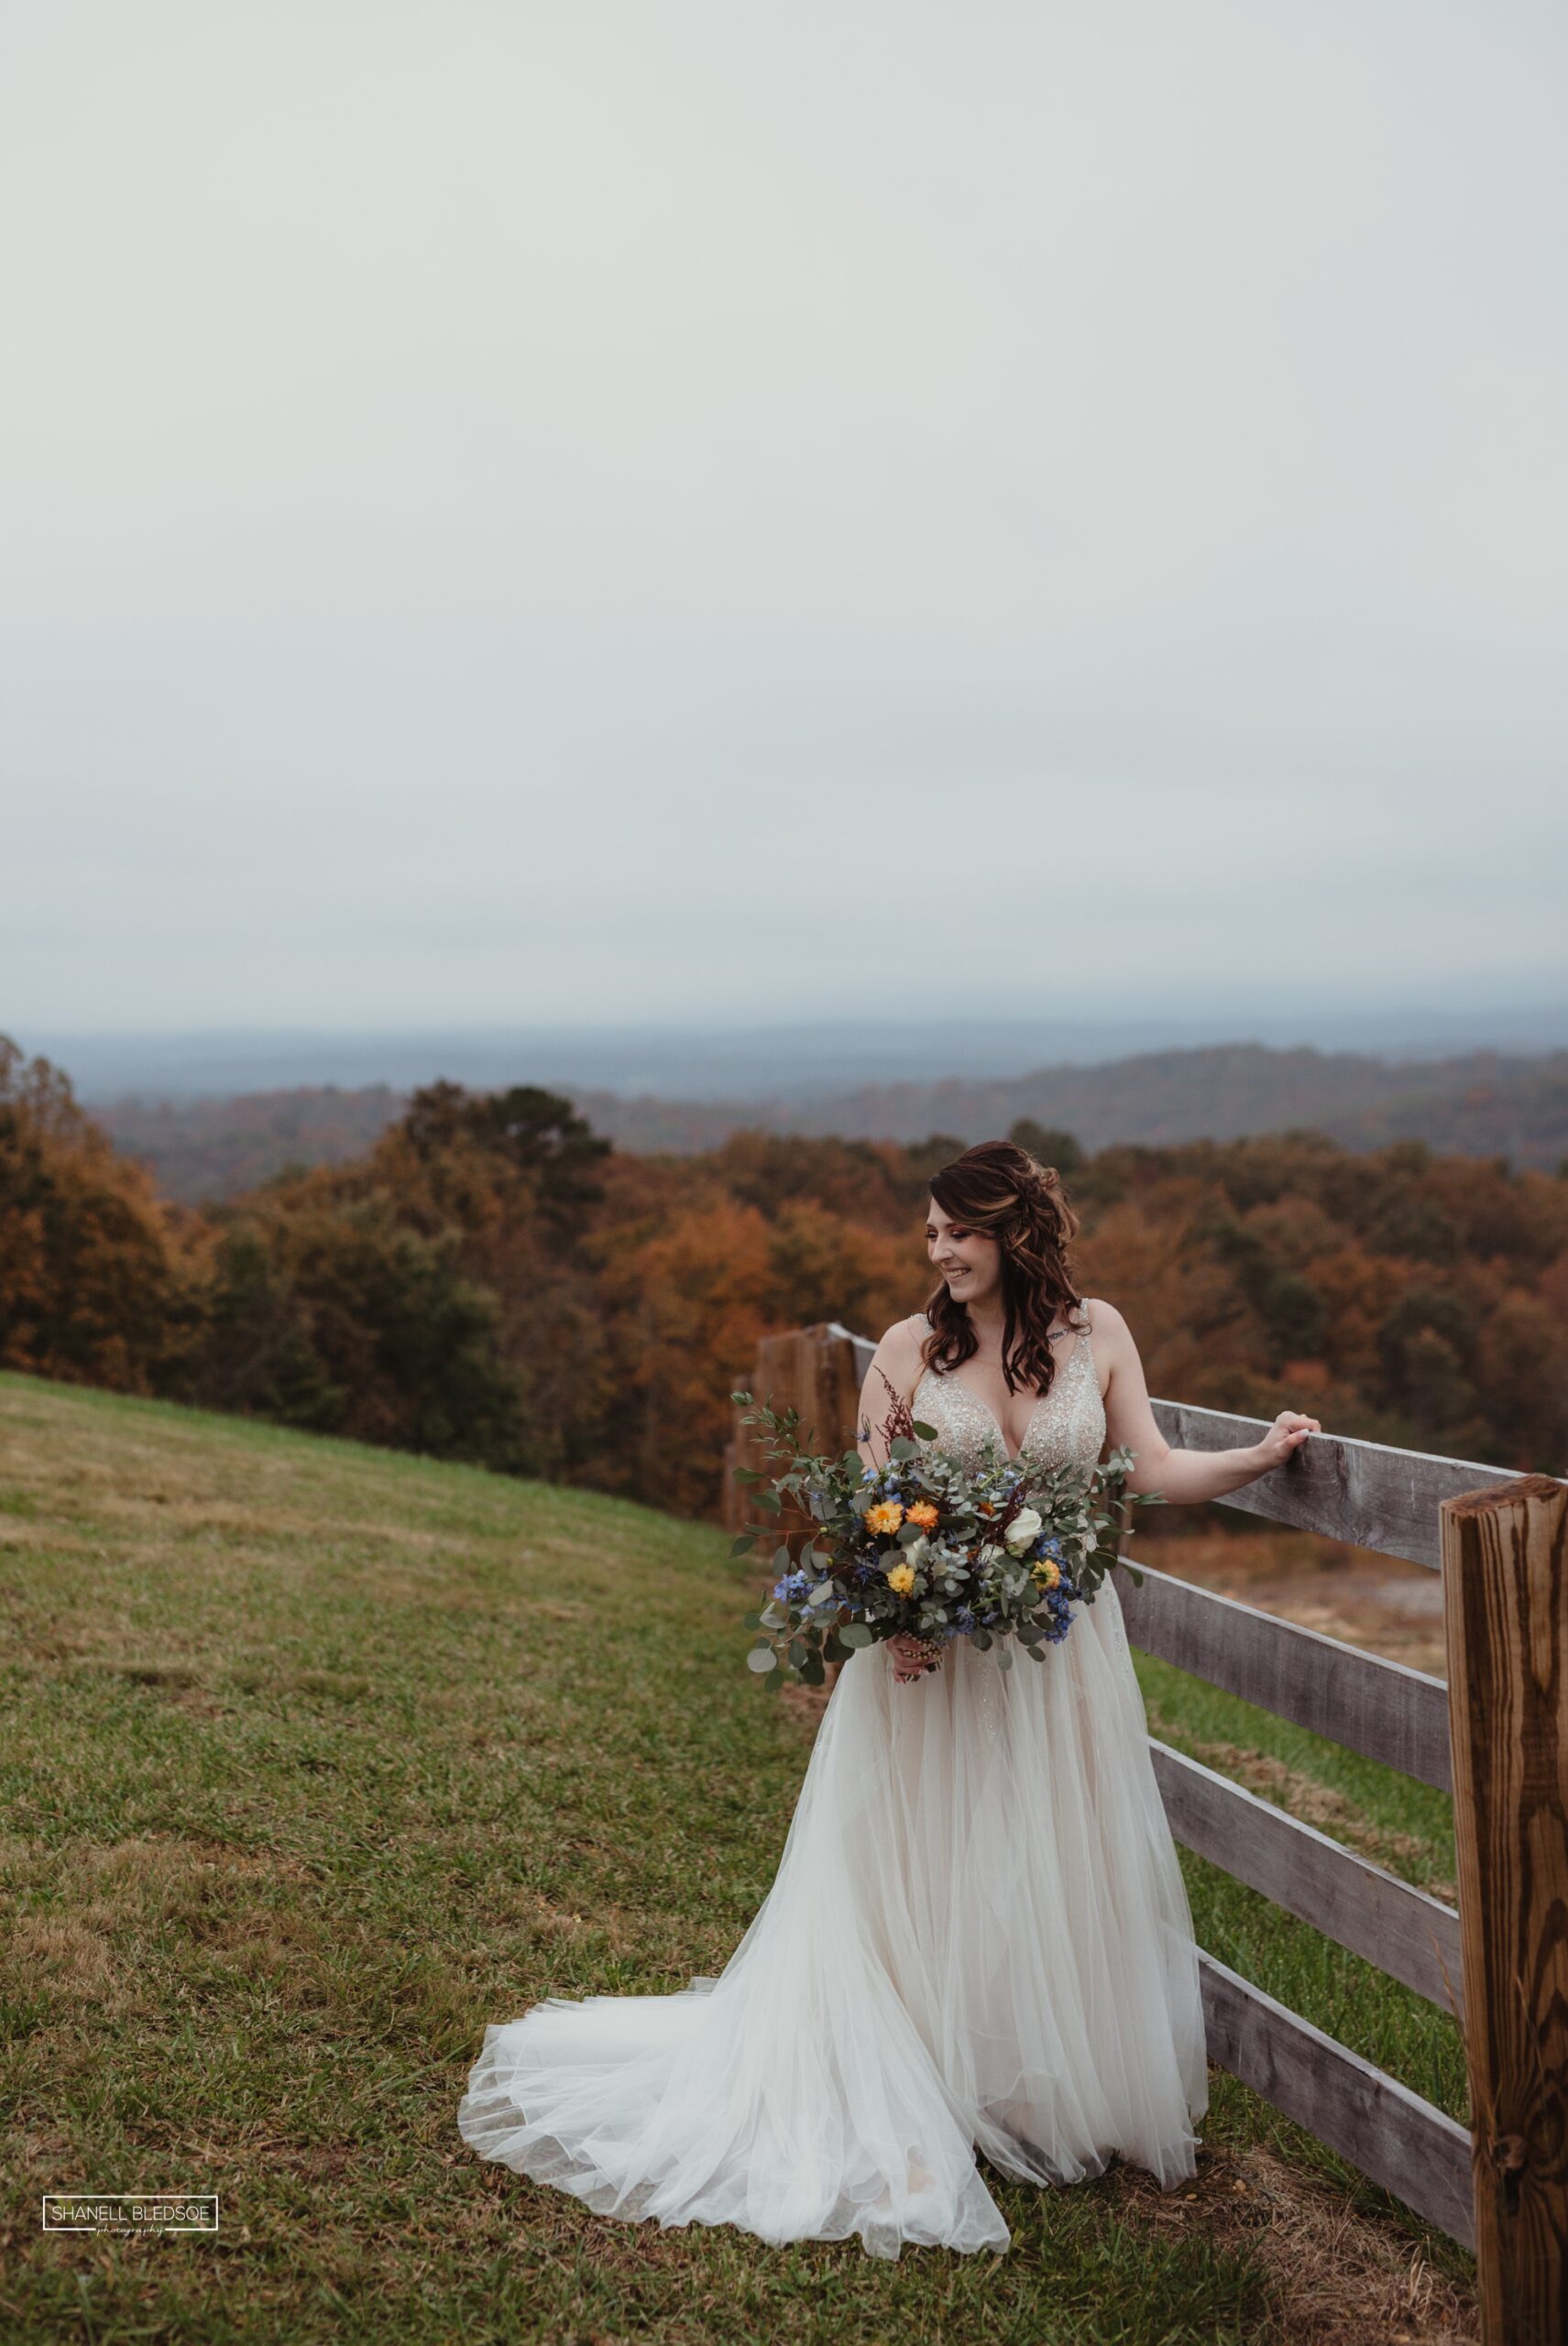 Mountain view destination wedding venue near Chattanooga, TN